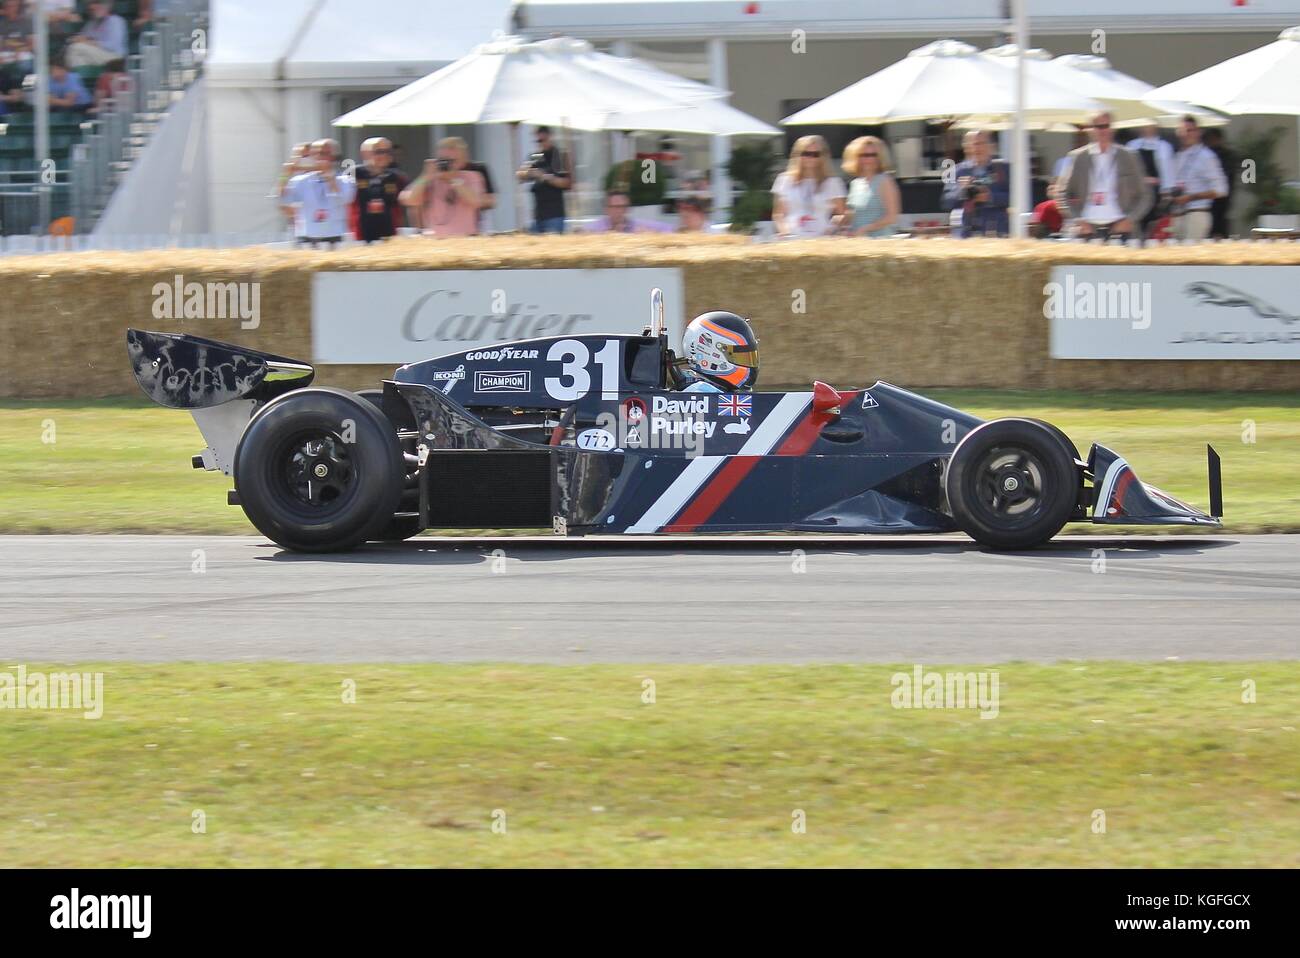 David Purley lec Cosworth crp1 in Goodwood Festival der Geschwindigkeit 2015 Stockfoto